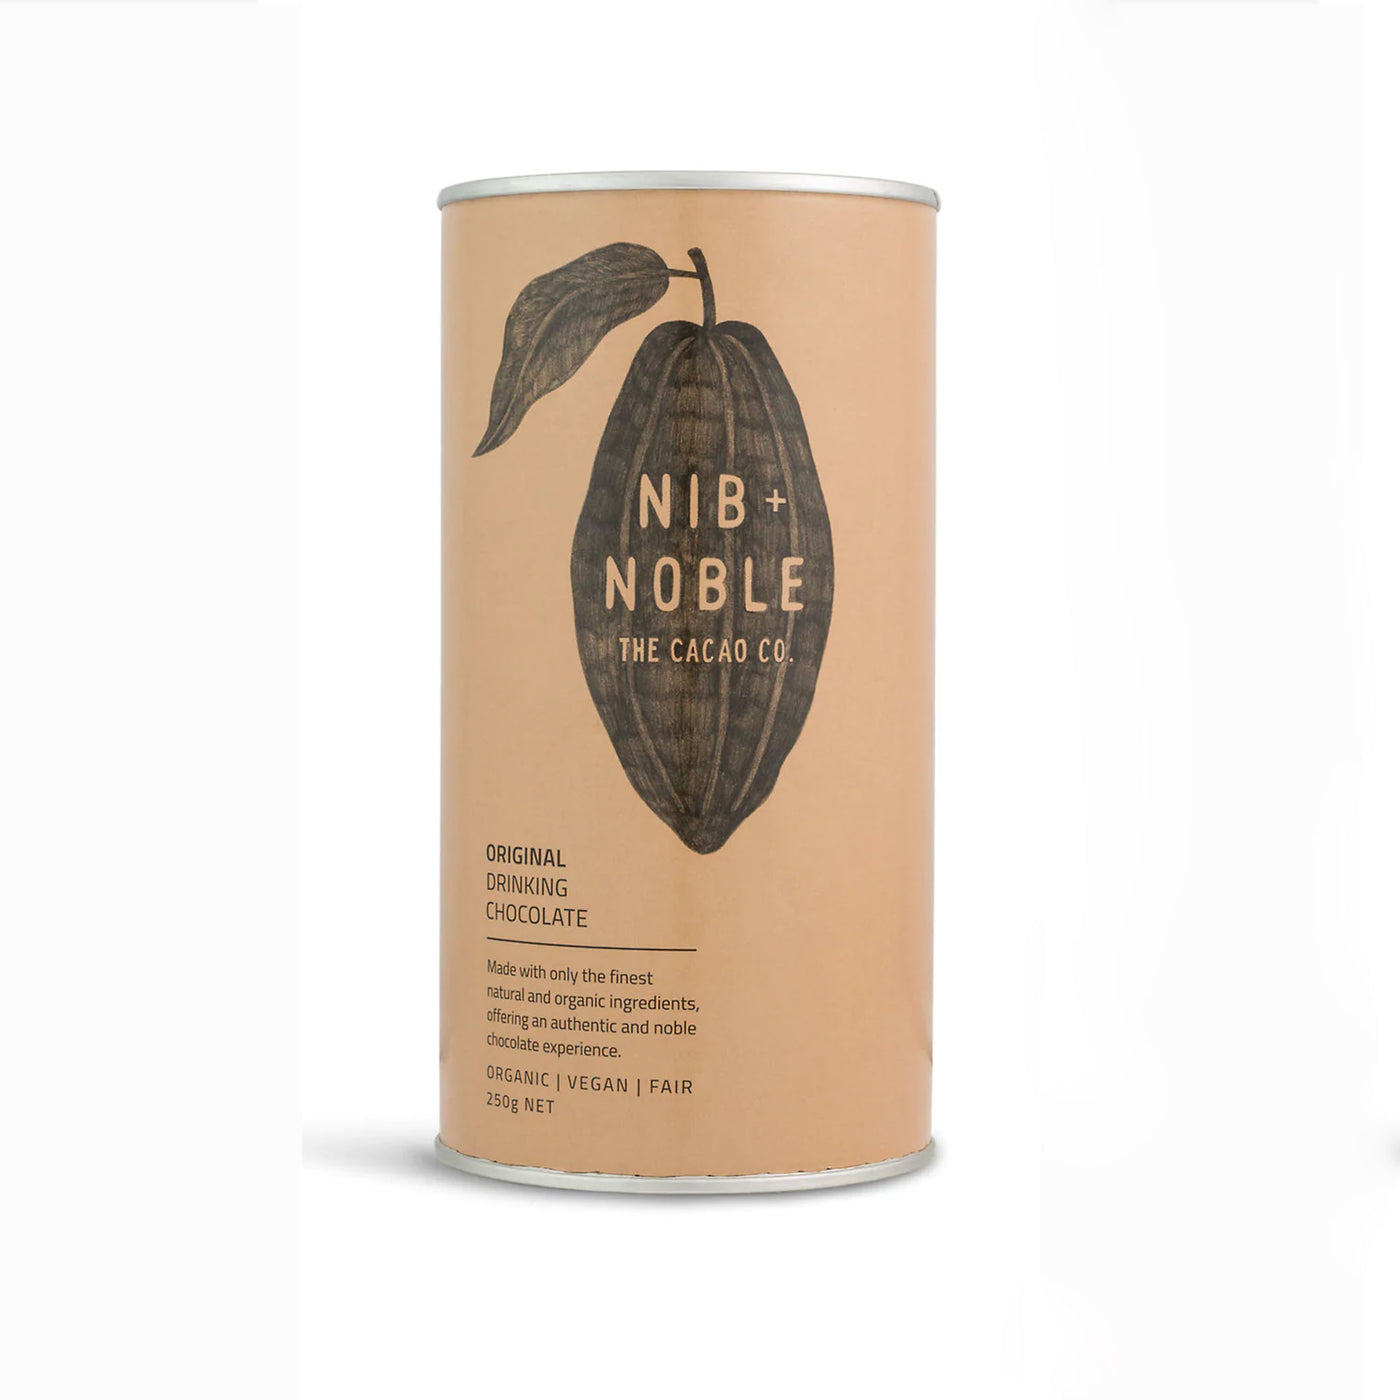 Nib and Noble Organic Drinking Chocolate - Original